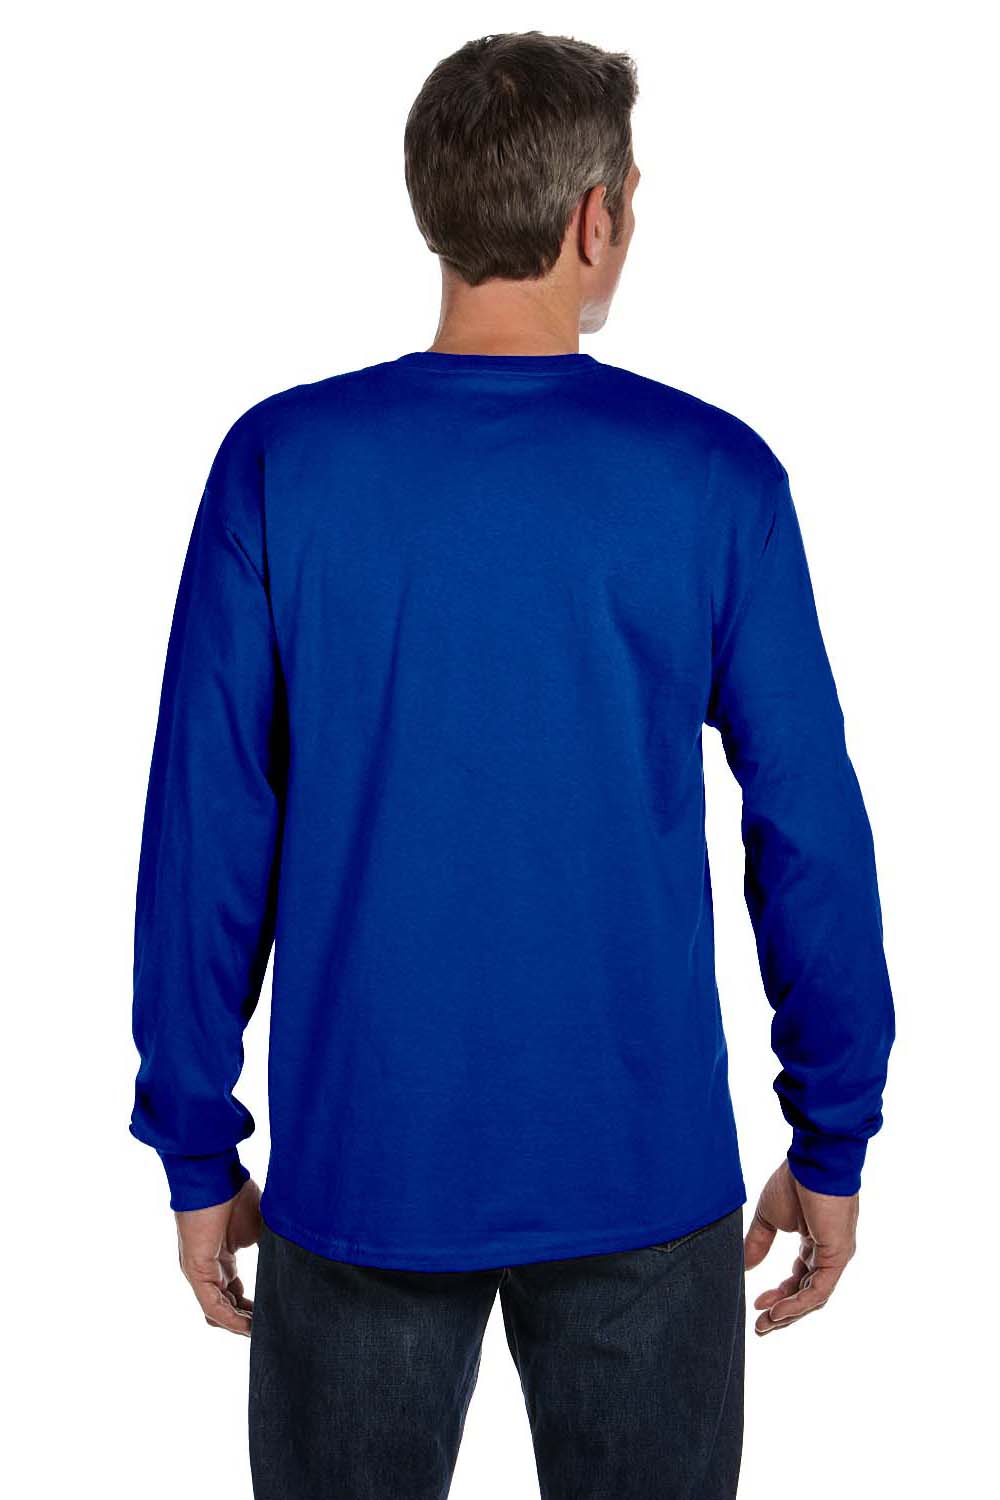 Hanes 5596 Mens ComfortSoft Long Sleeve Crewneck T-Shirt w/ Pocket Royal Blue Back